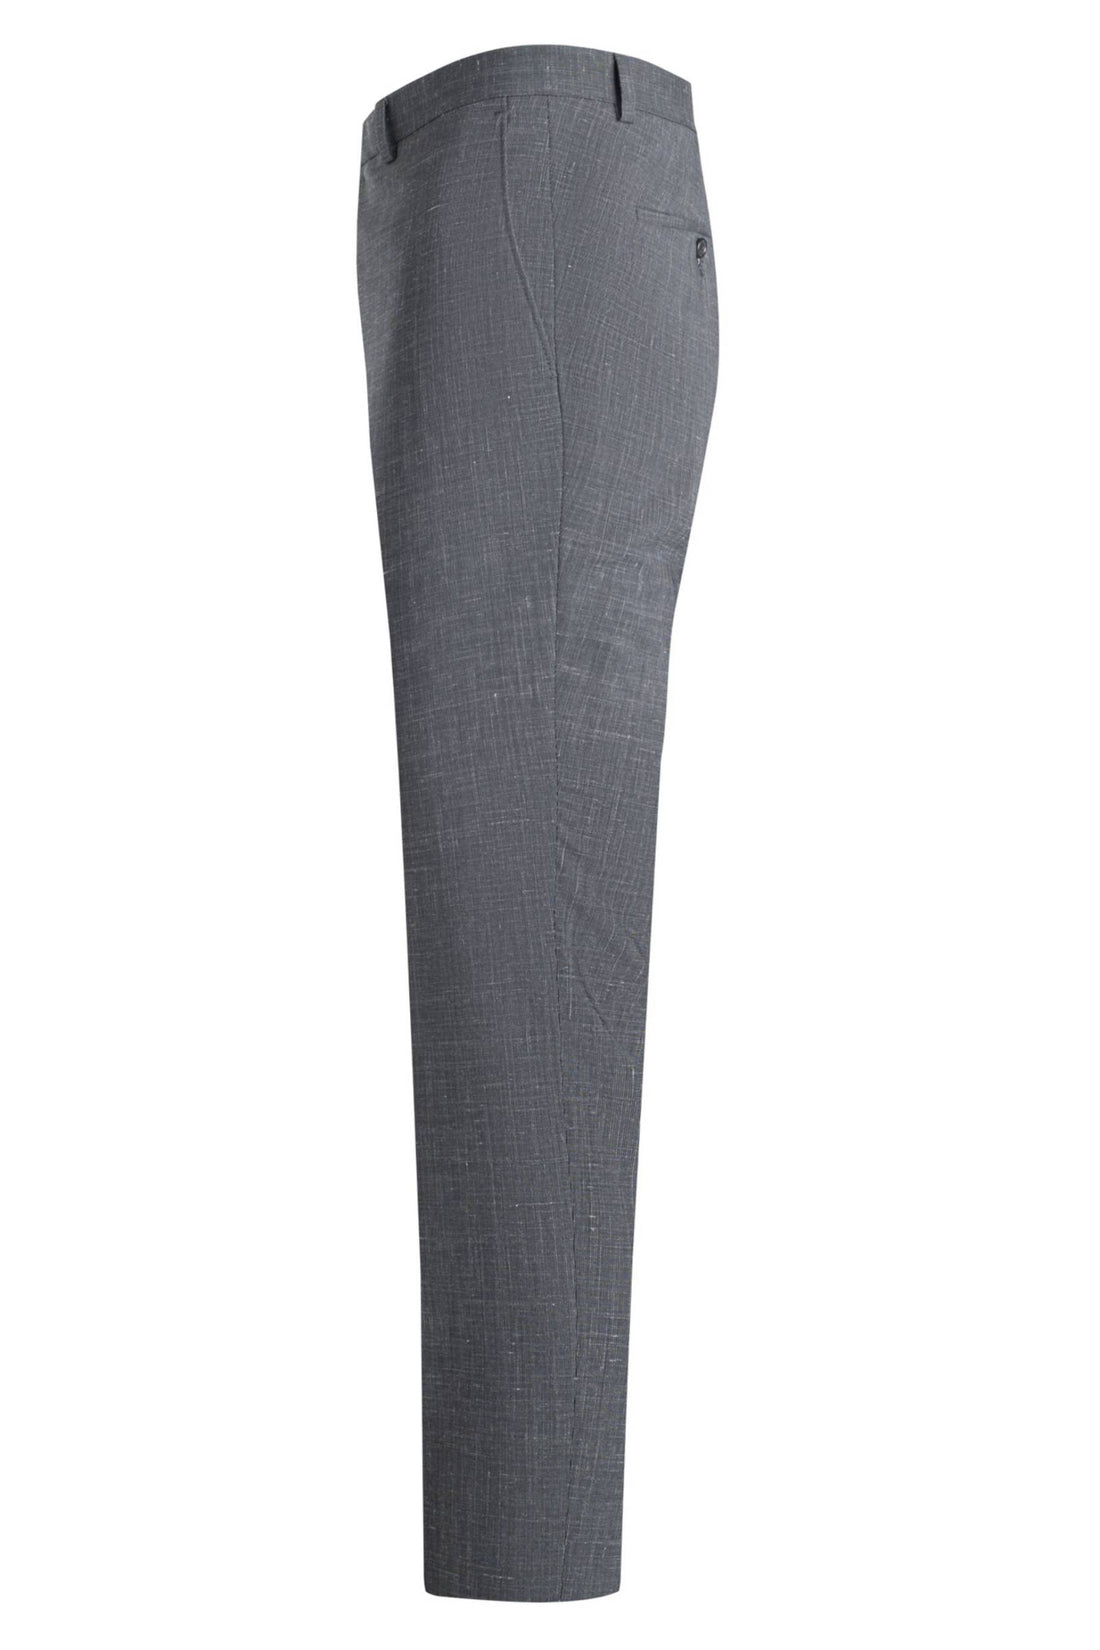 Samuelsohn Grey Wool Linen Stretch Suit Side Pant